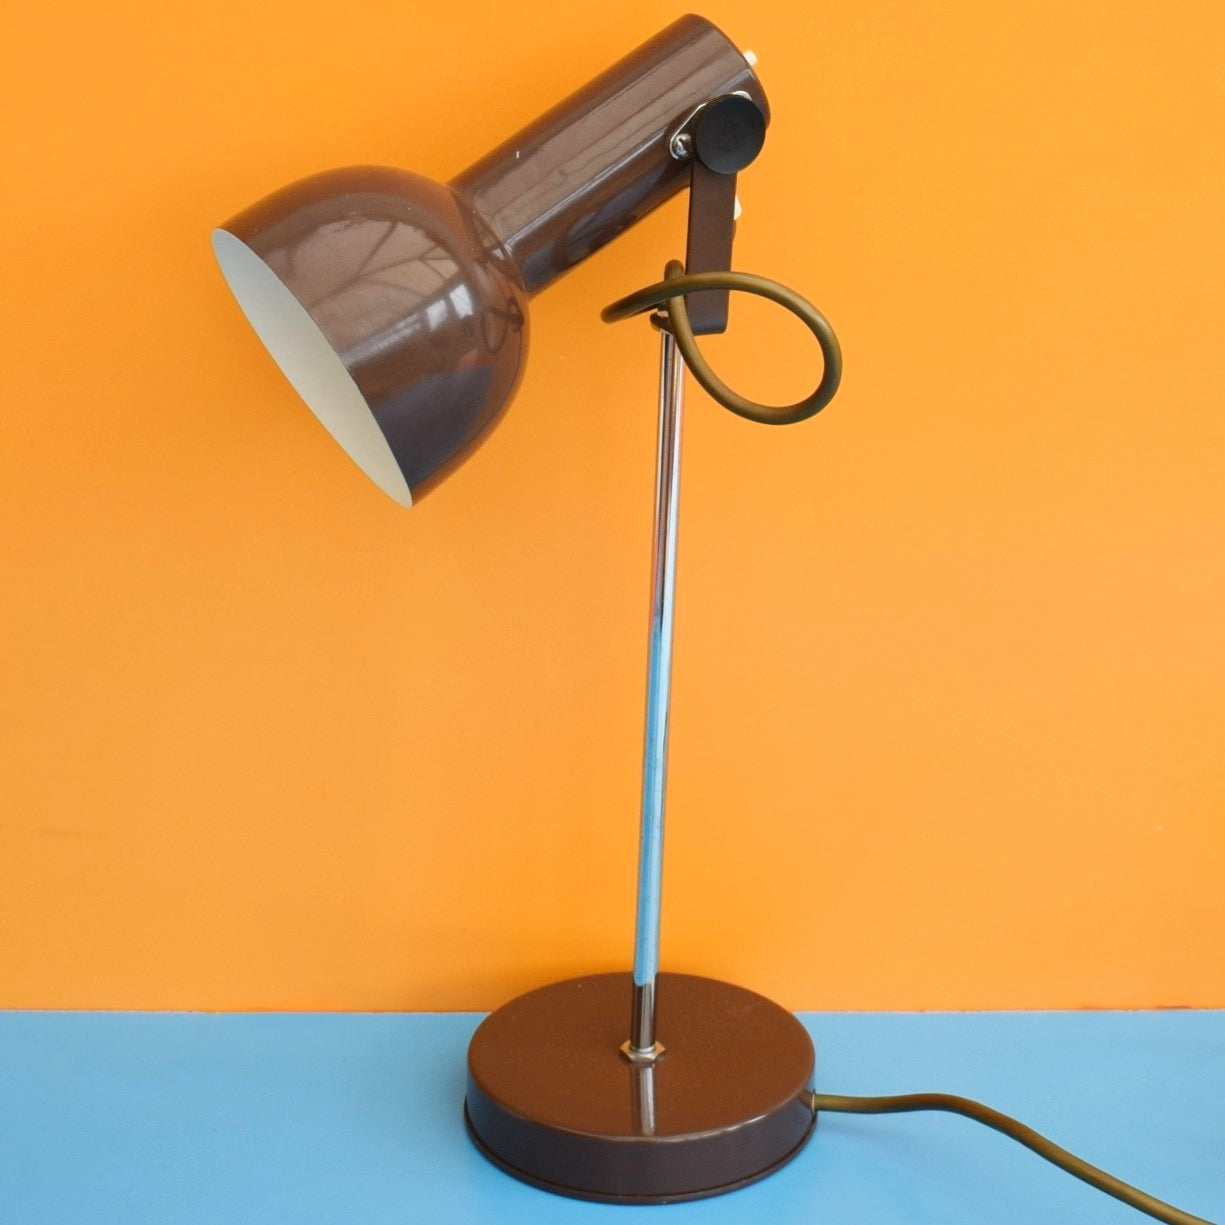 Vintage 1970s Desk Lamp - Chocolate Brown / Chrome